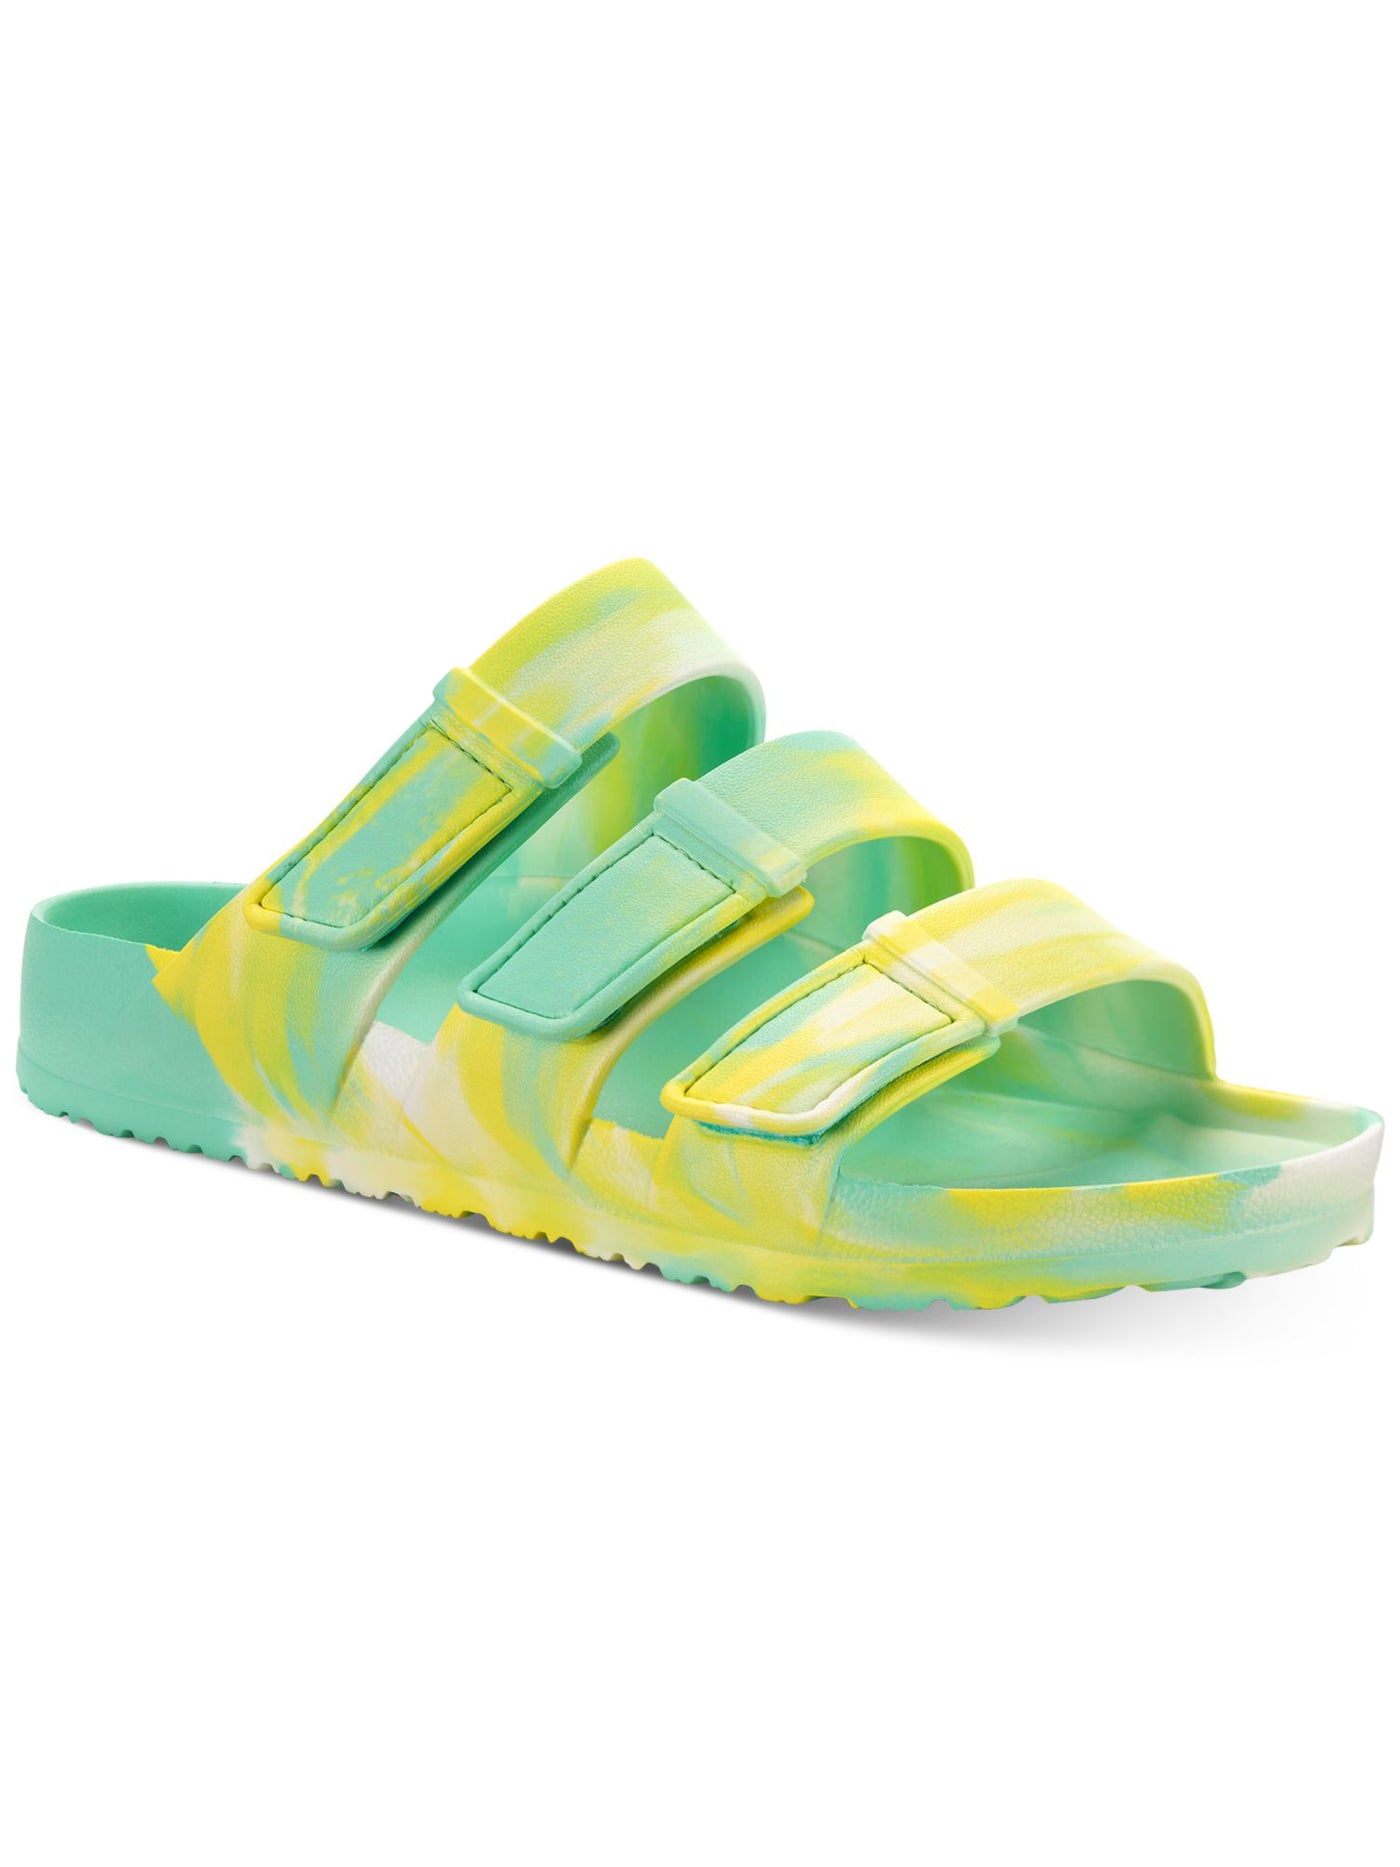 SUN STONE Womens Green Tie Dye Water Resistant Flexible Comfort Adjustable Arizona Essentials Round Toe Slide Sandals Shoes 10 M